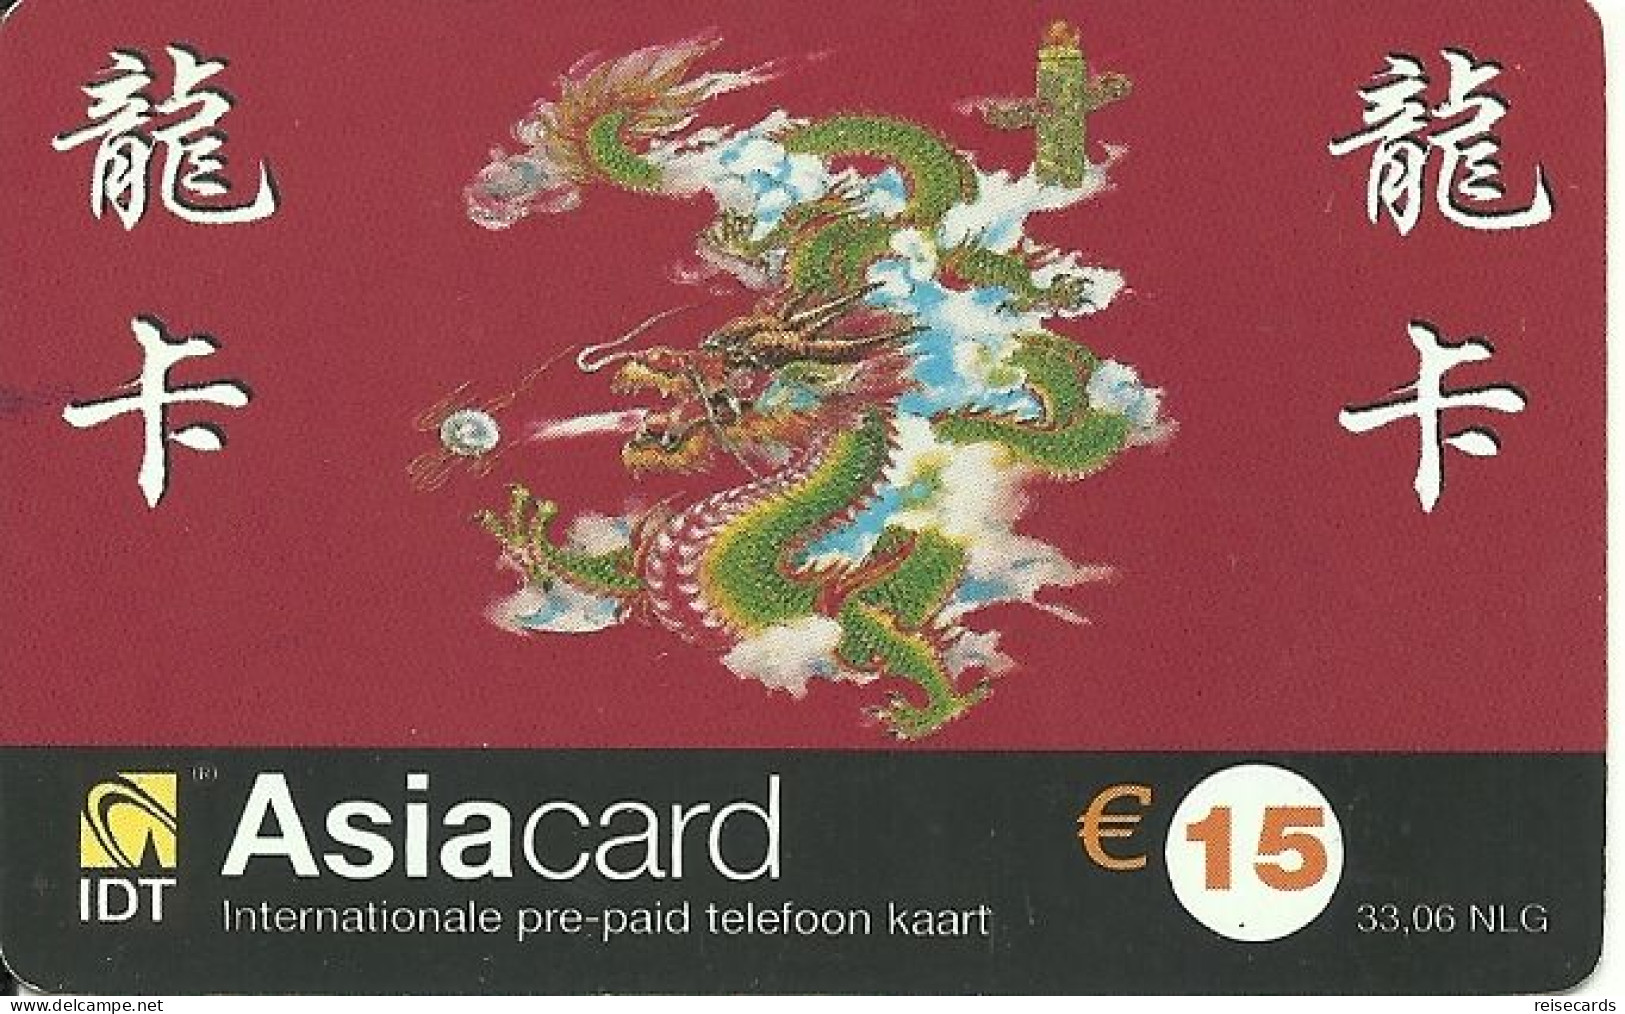 Netherlands: Prepaid IDT - Asia Card 03.04 - Schede GSM, Prepagate E Ricariche